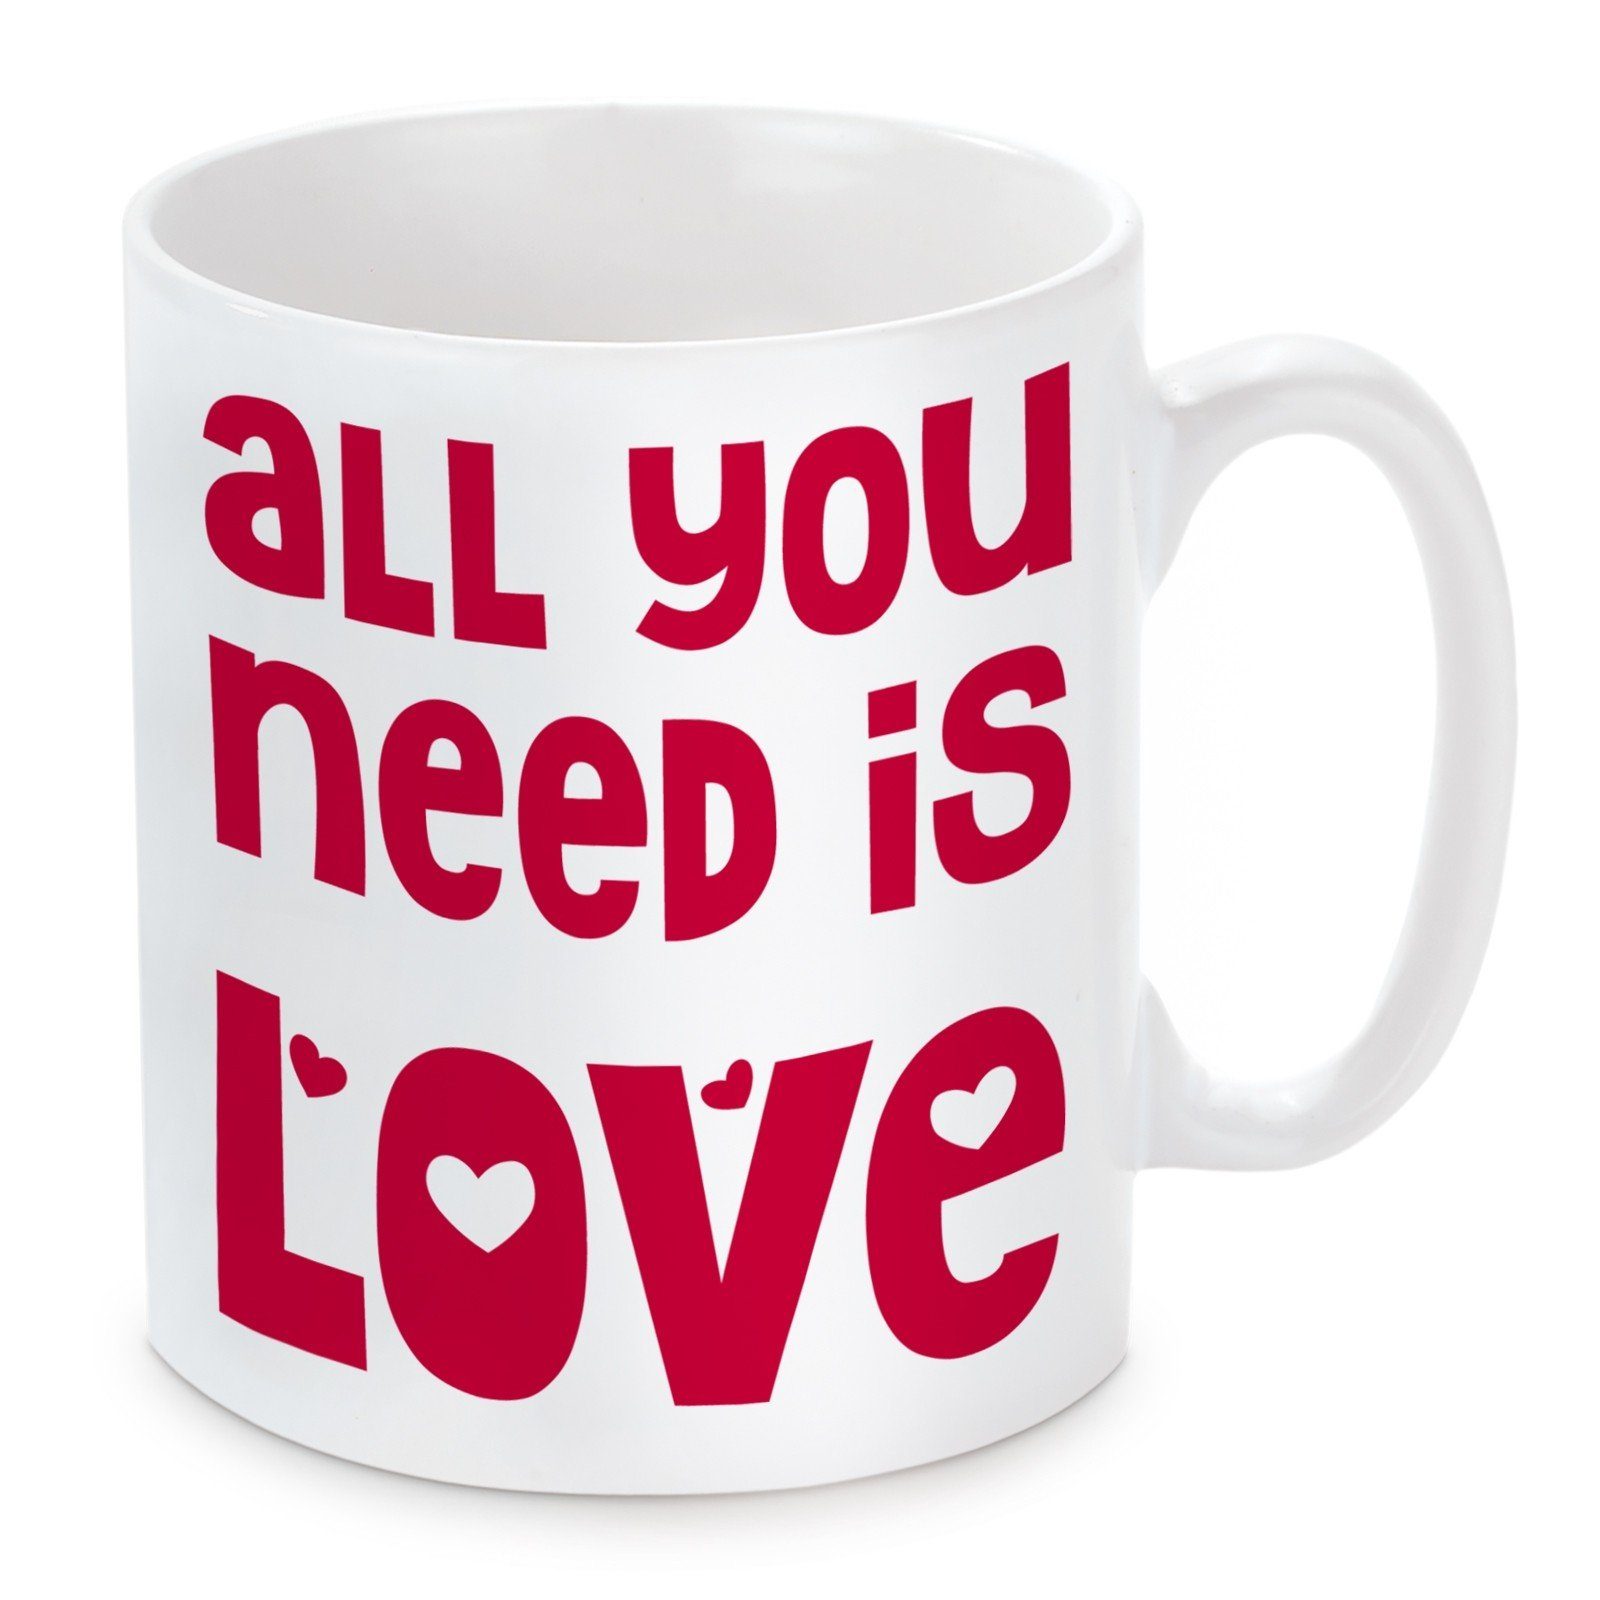 Herzbotschaft Tasse Kaffeebecher mit Motiv All you need is love, Keramik, Kaffeetasse spülmaschinenfest und mikrowellengeeignet